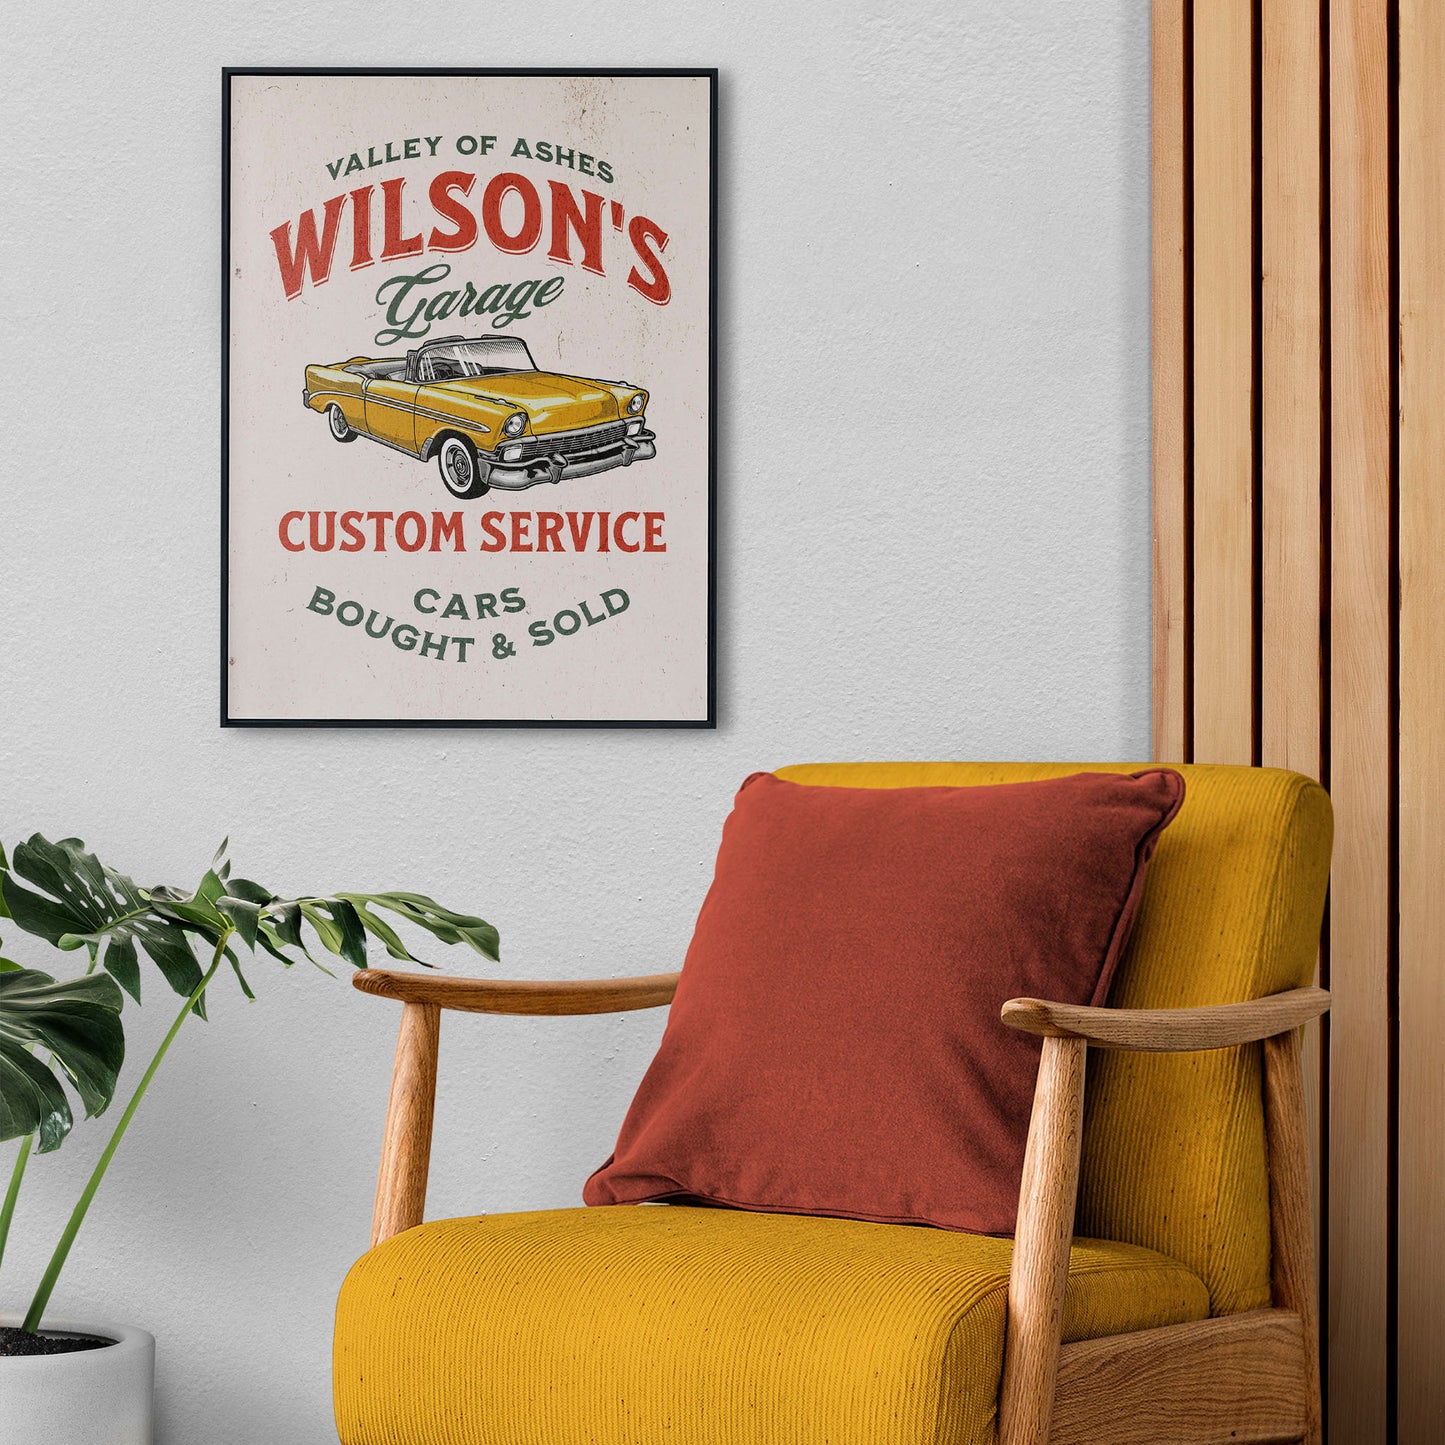 Wilson's Garage Vintage Poster Print